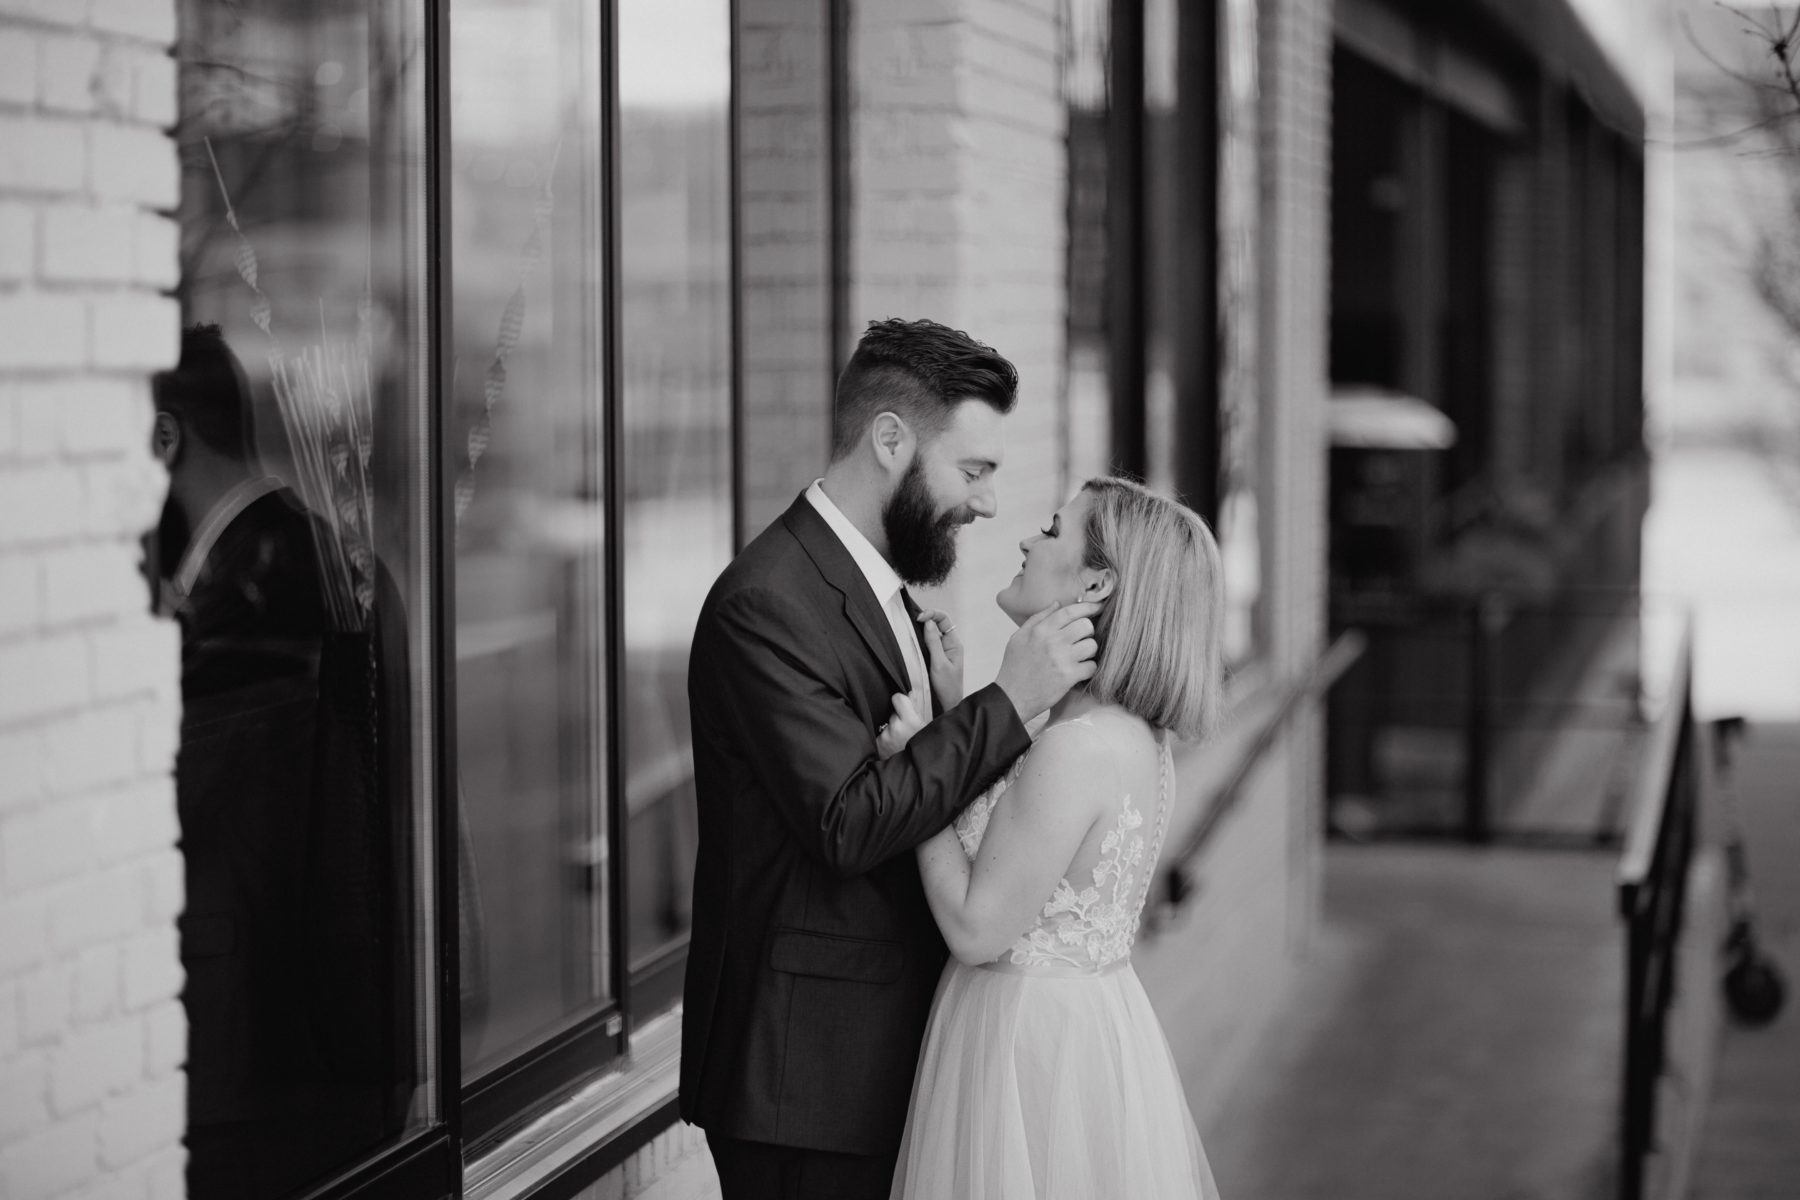 Black and White Wedding Photography: Nashville brunch elopement featured on Nashville Bride Guide